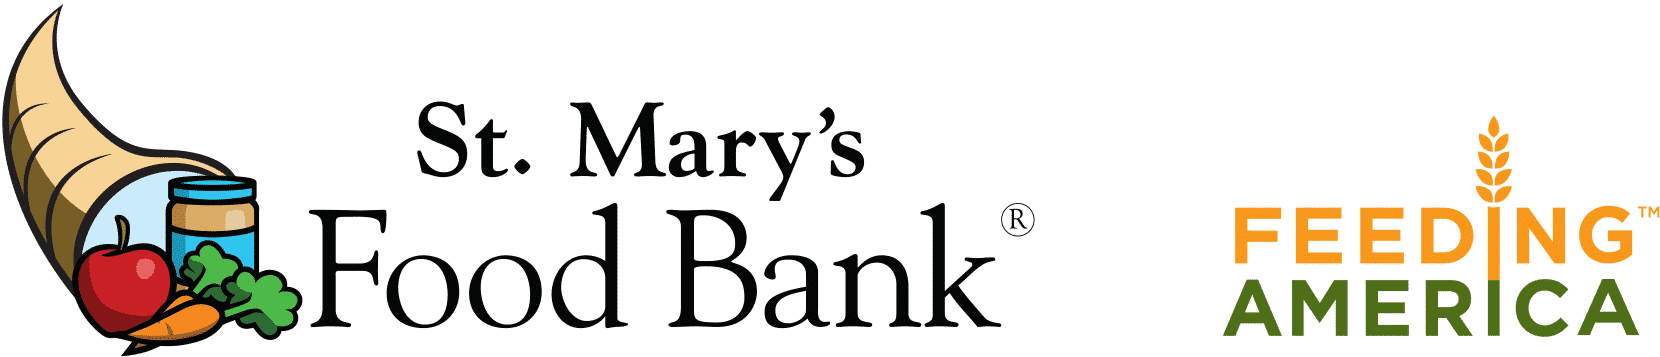 St Mary's Food Bank - Feeding America